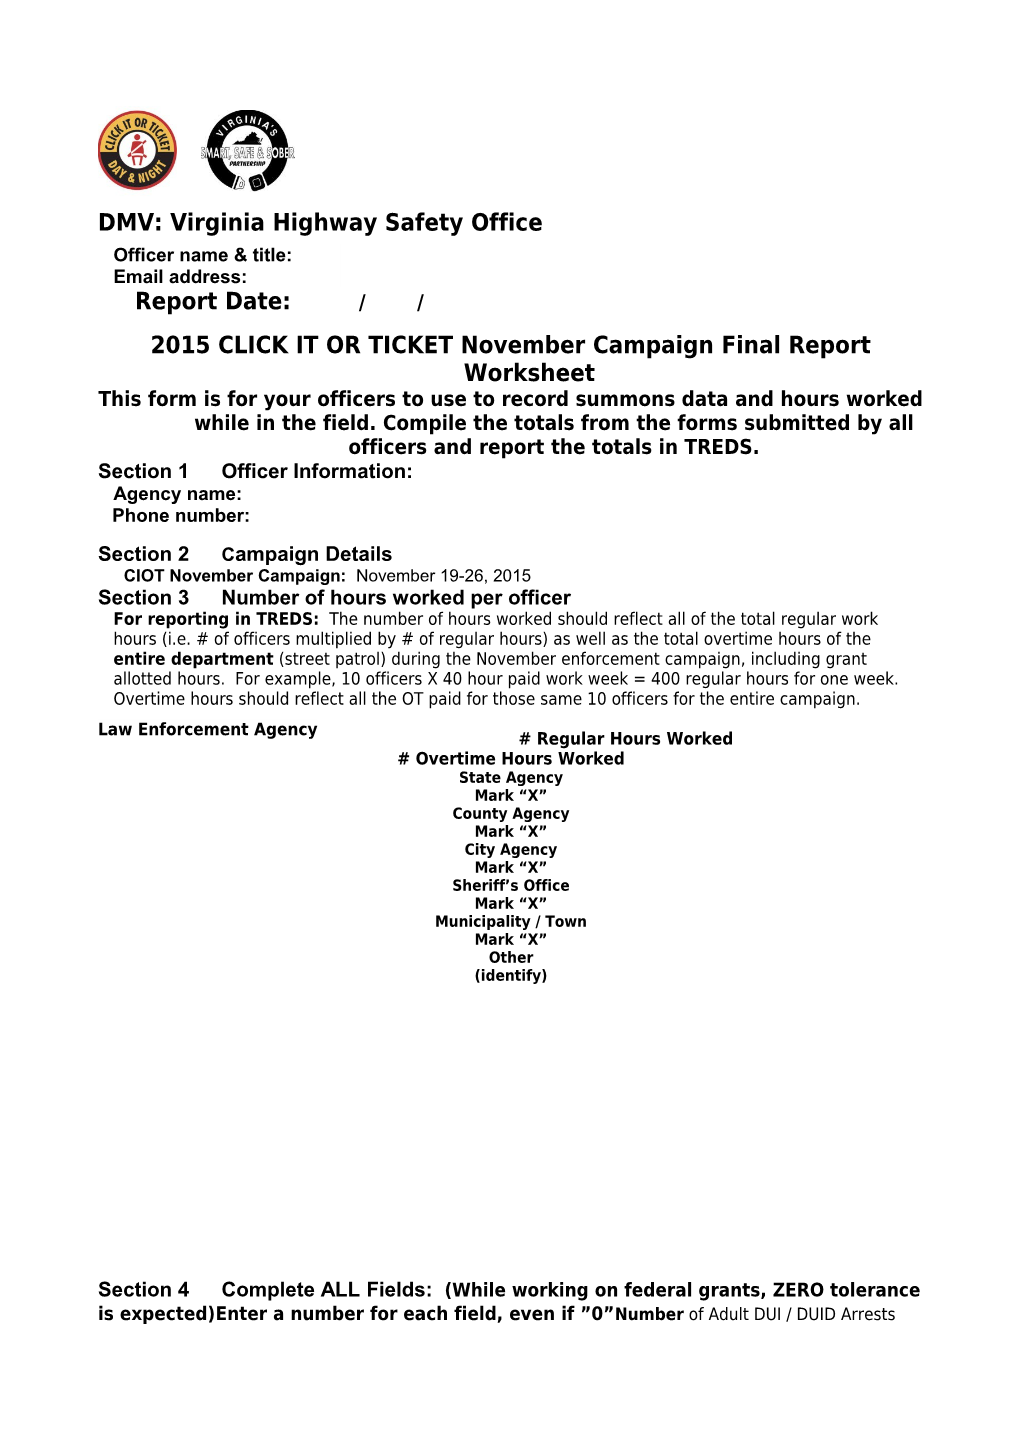 DMV: Virginia Highway Safety Office Report Date: /